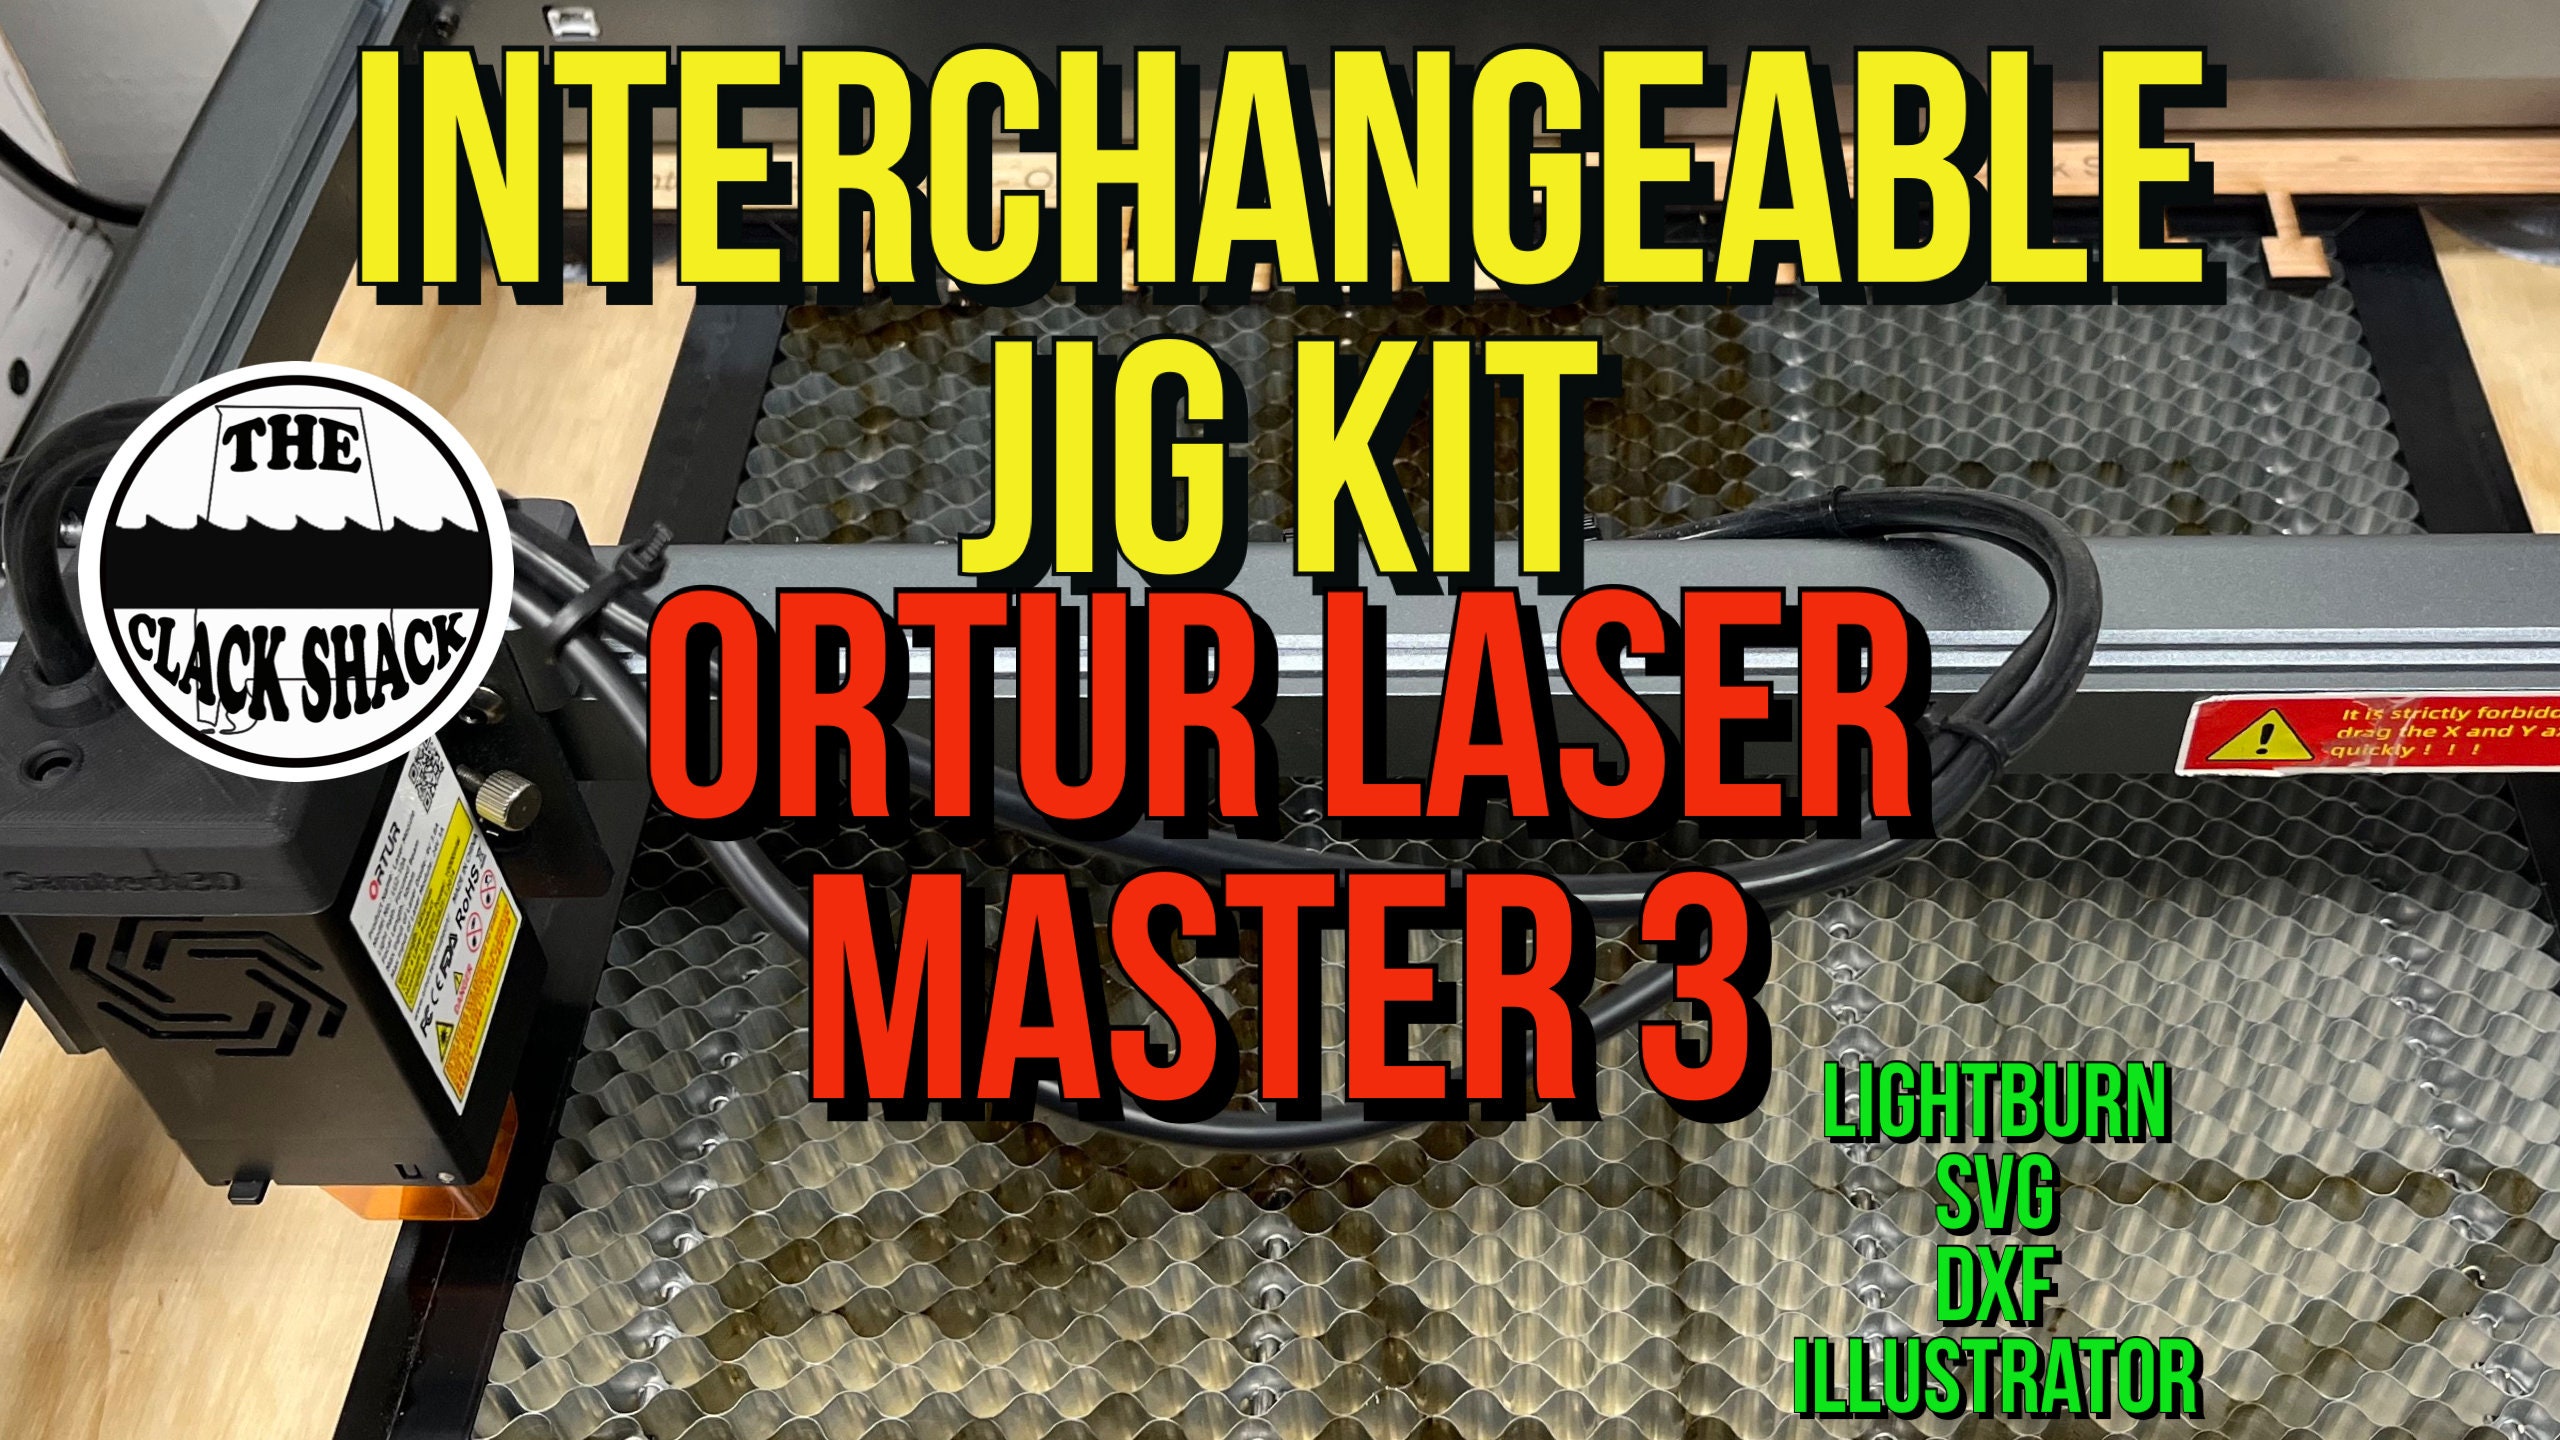 Interchangeable Jig Kit Ortur Laser Master 3 FILE 